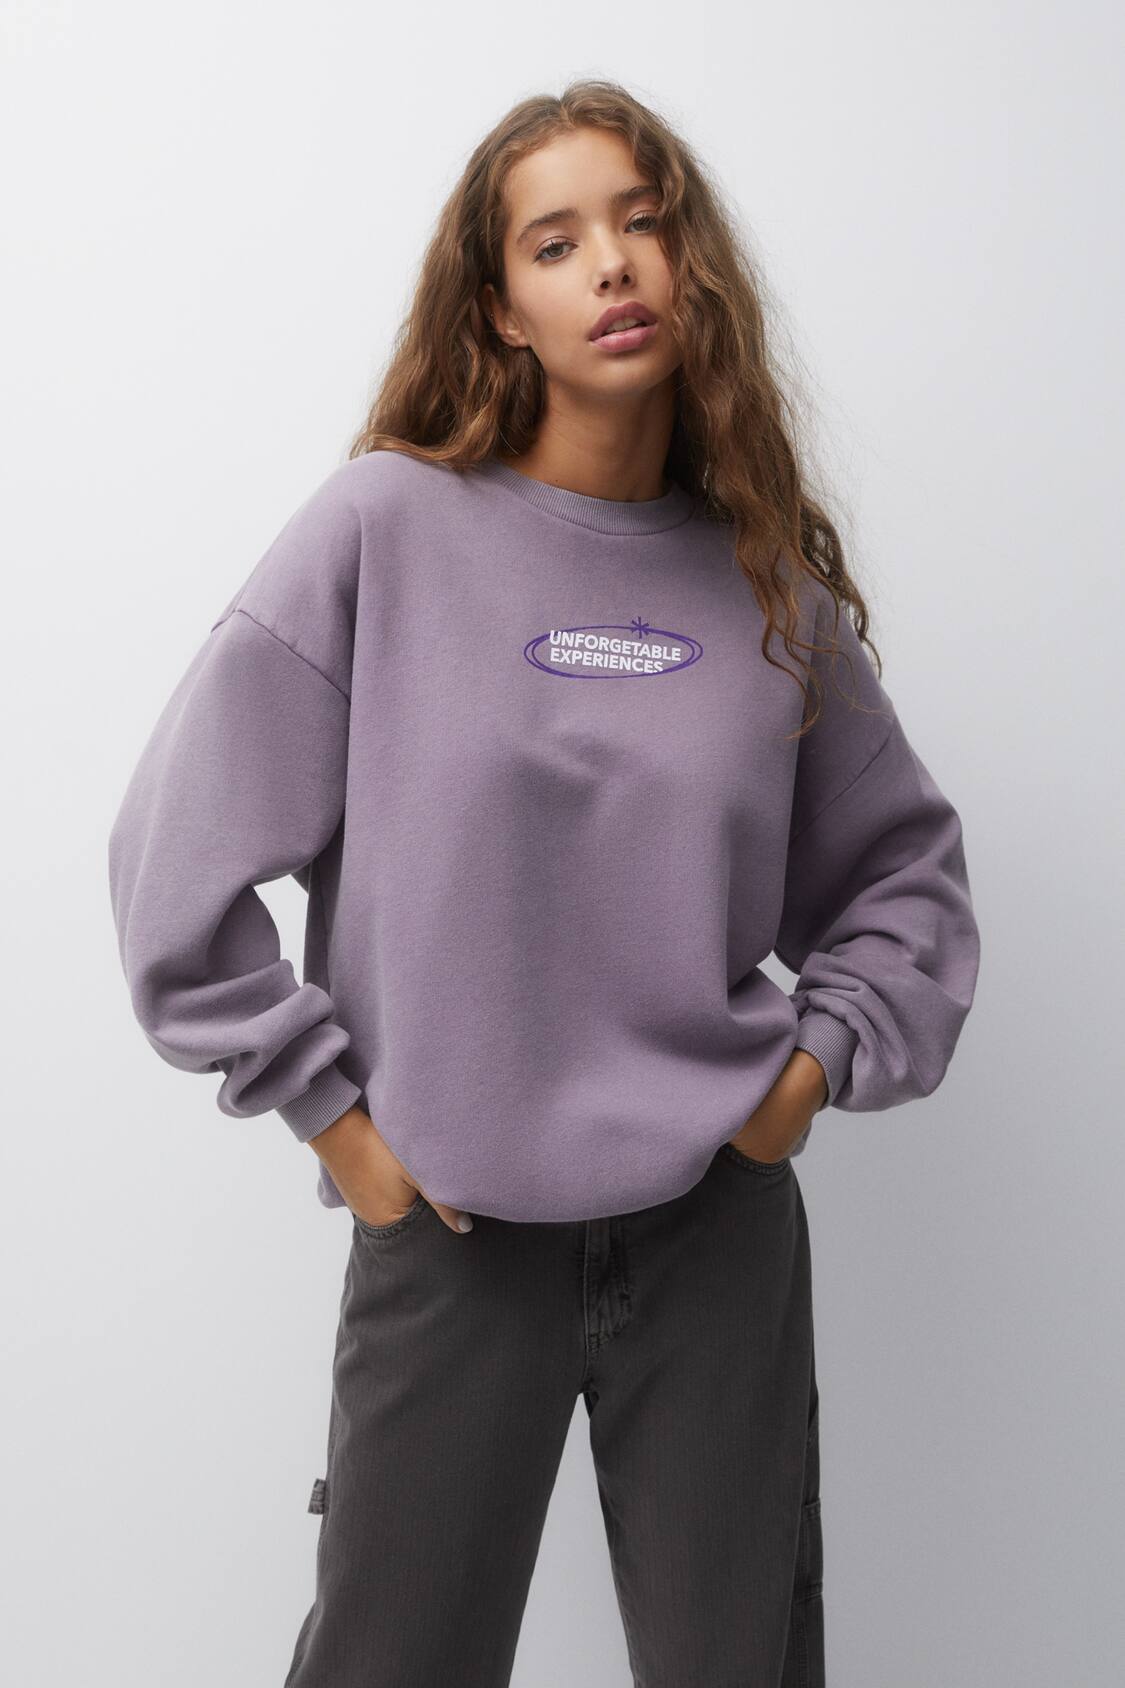 Pull&Bear Women's' Lead Floral Print Sweatshirt